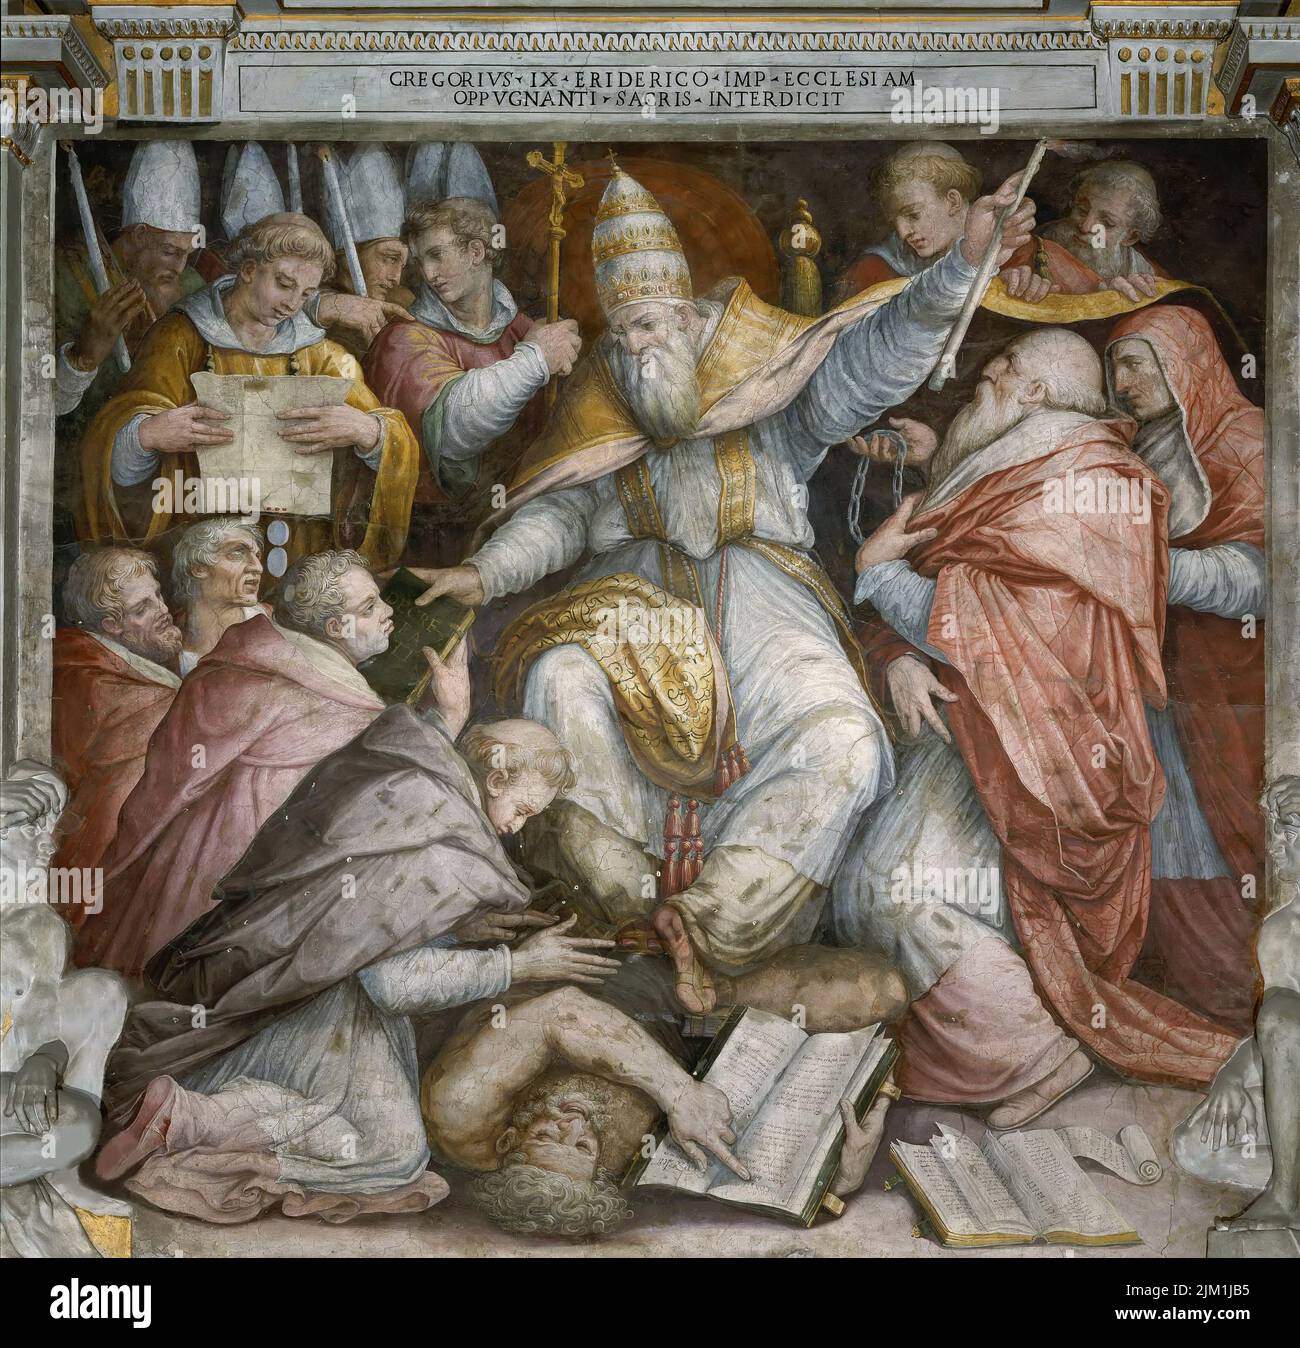 The Excommunication of Frederick II by Pope Gregory IX. Museum: Apostolic Palace, Vatican. Author: GIORGIO VASARI. Stock Photo